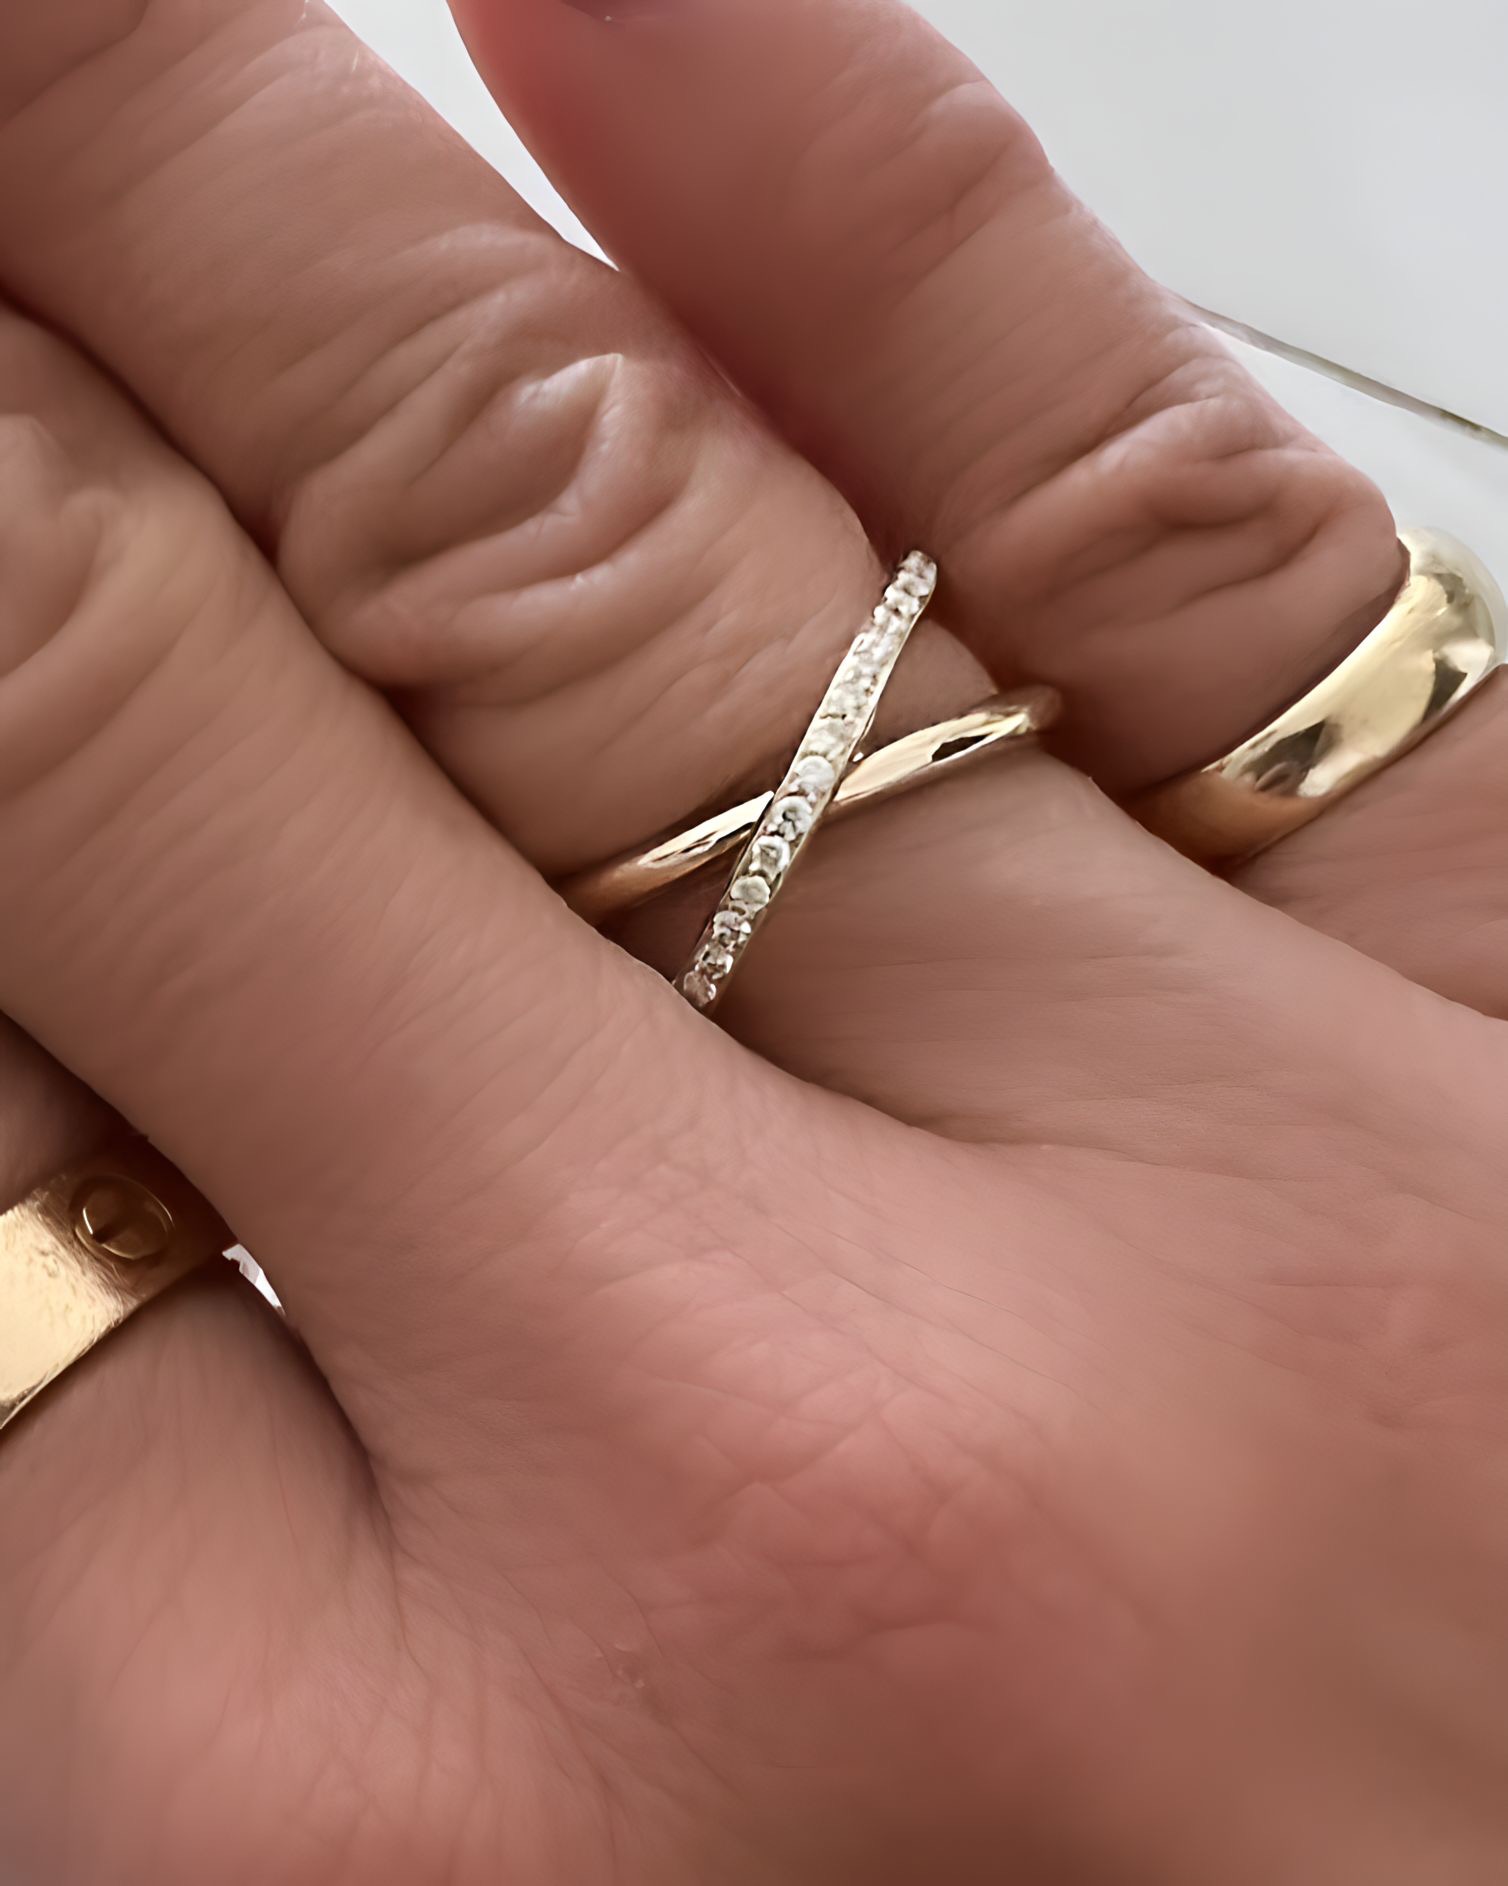 9k yellow gold wedding rings with 0,8ct diamonds VS1-1